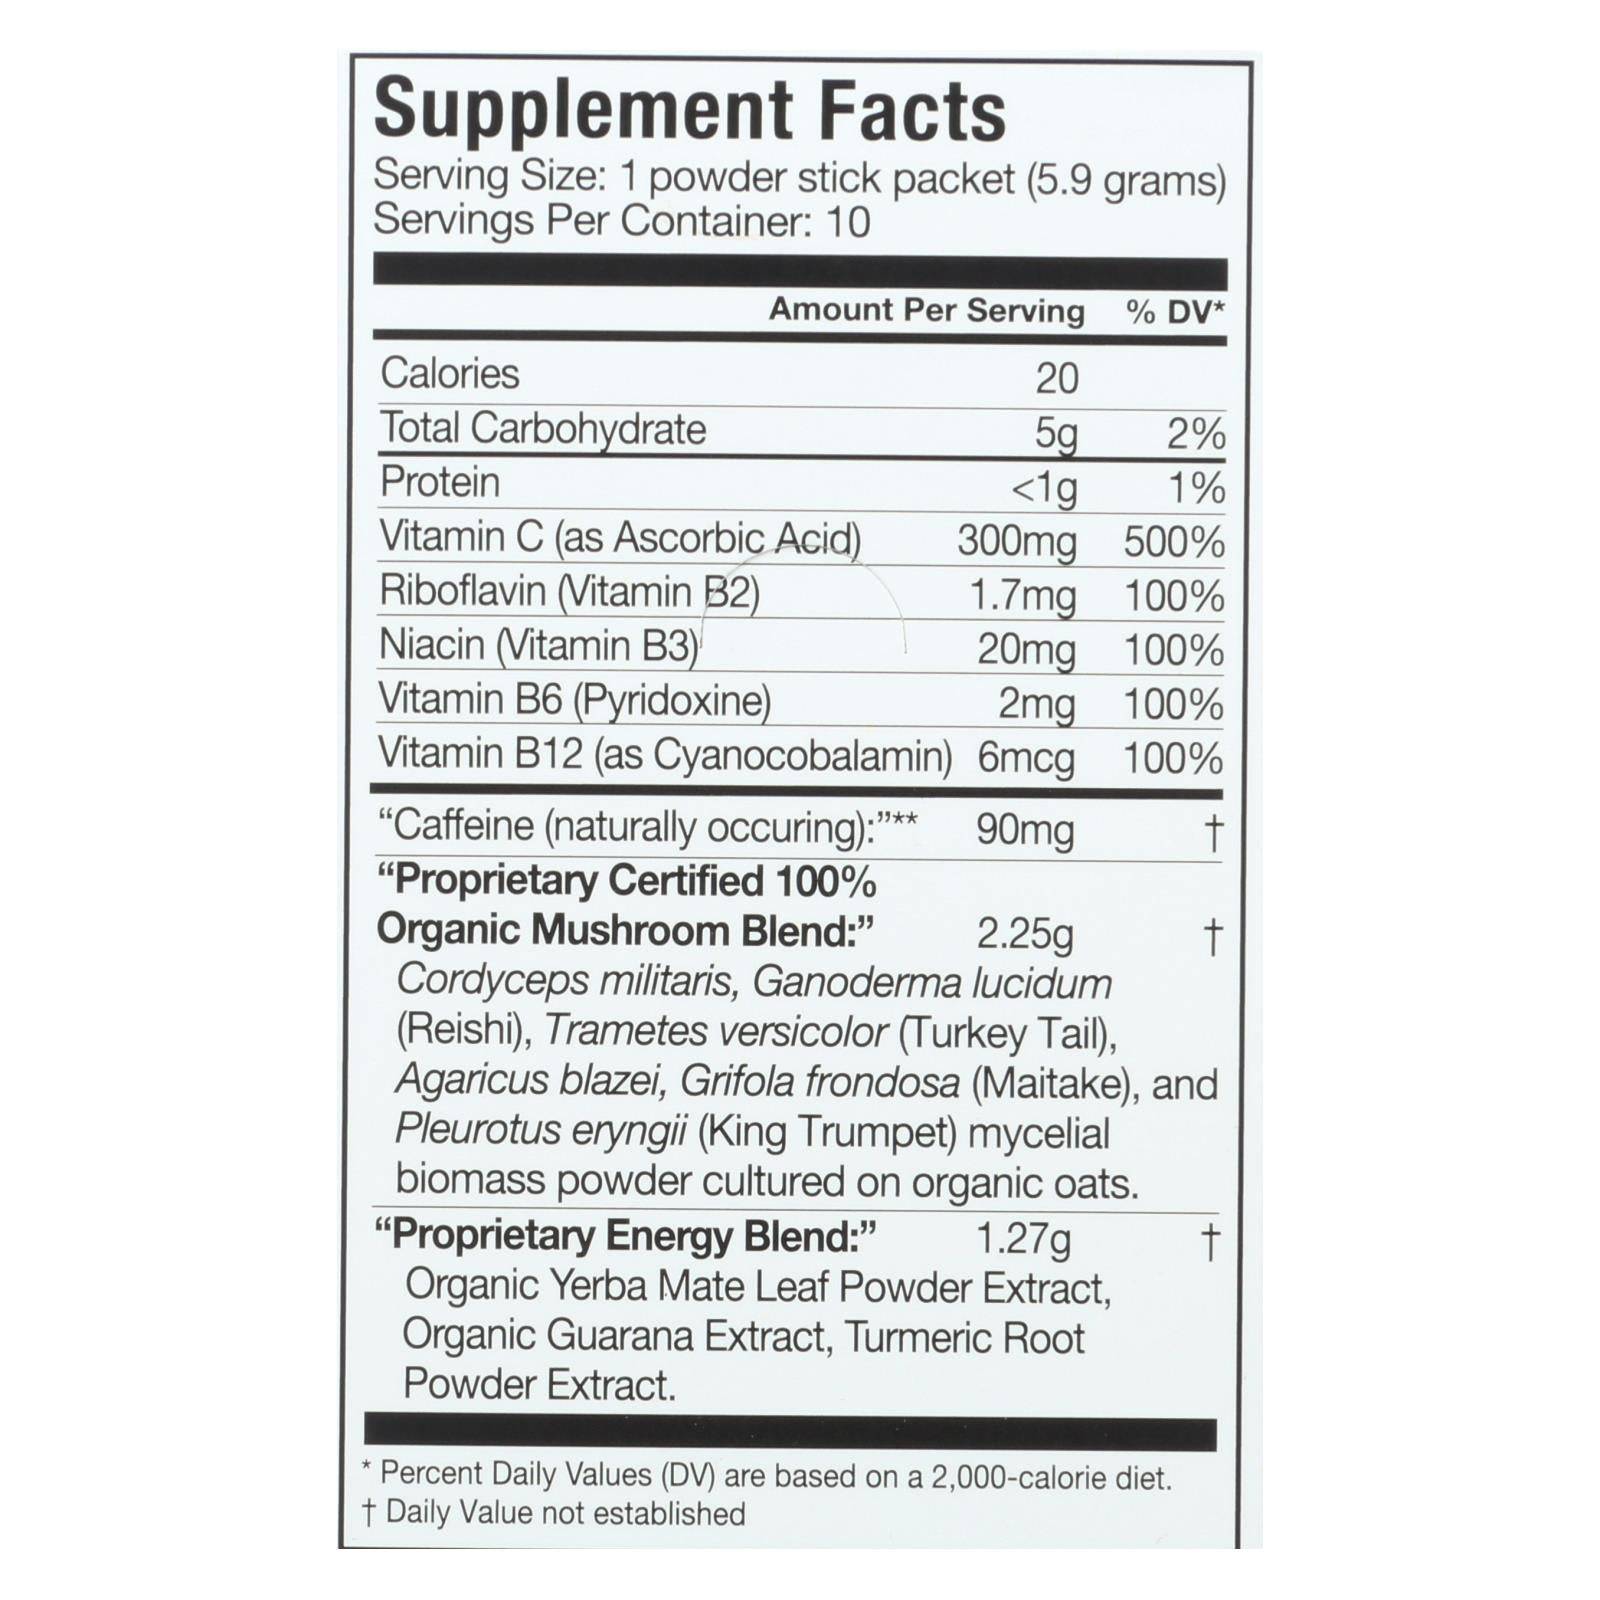 Om Organic Mushroom Nutrition Energy Citrus Orange Dietary Supplement Powder  - Case Of 10 - .21 Oz